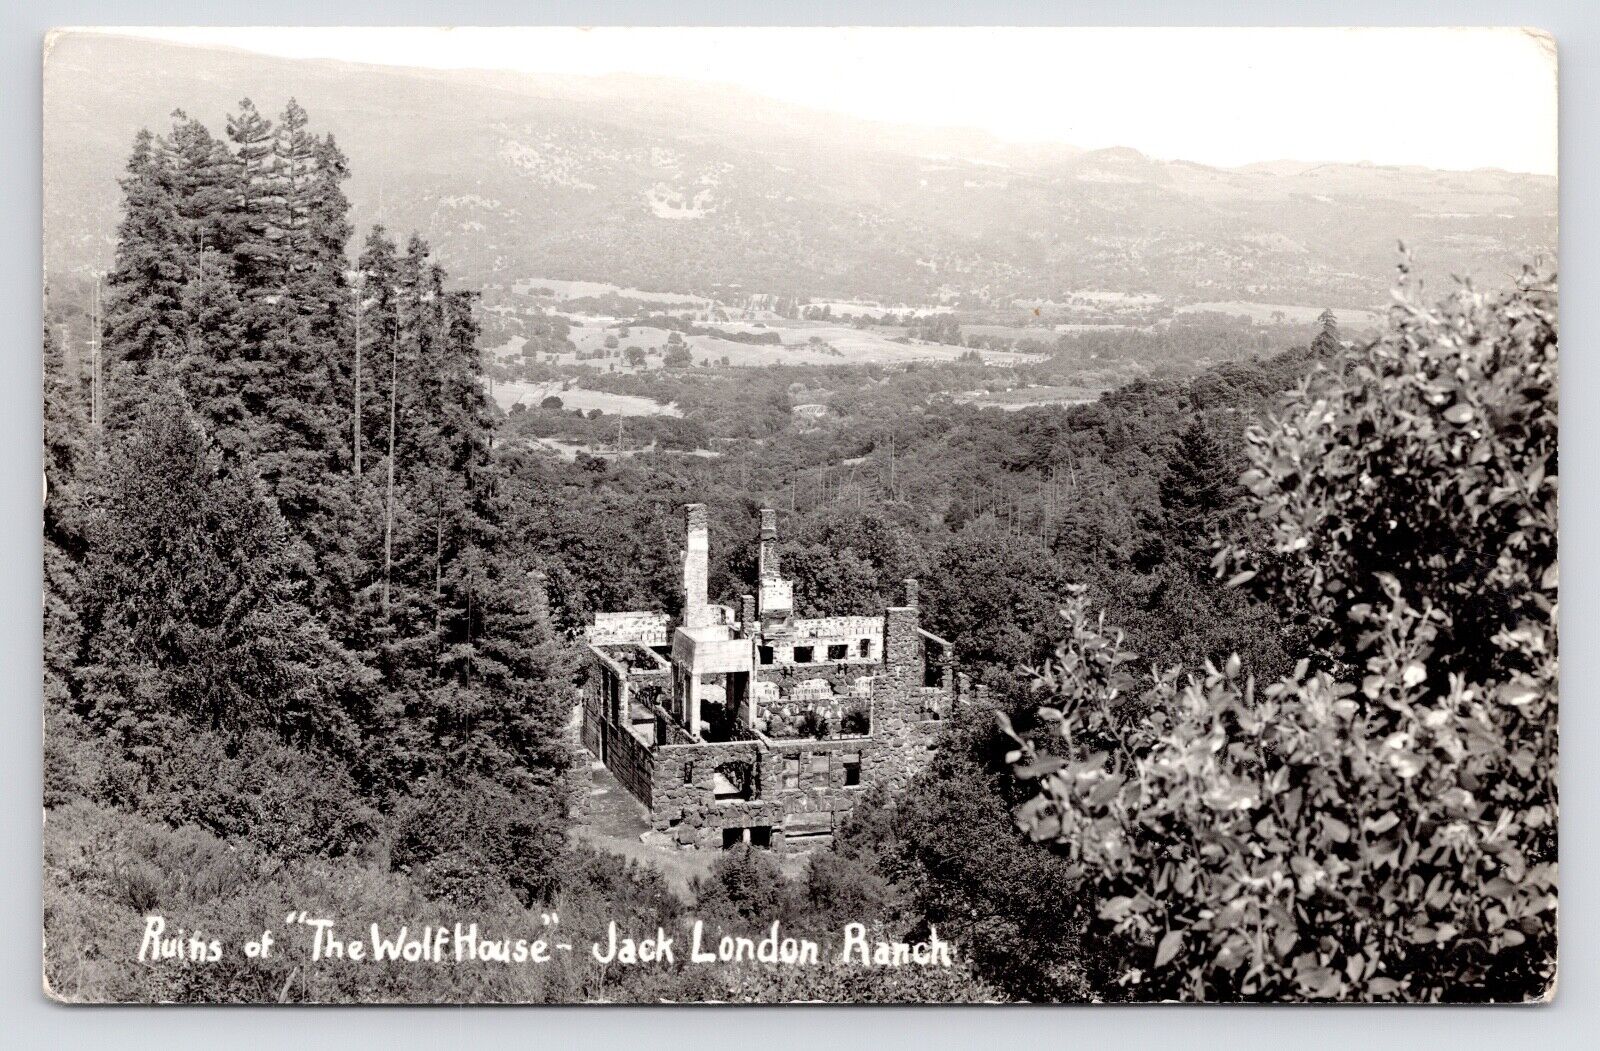 c1930s~Jack London Ranch~Wold House Ruins~Glen Ellen California CA~RPPC Postcard